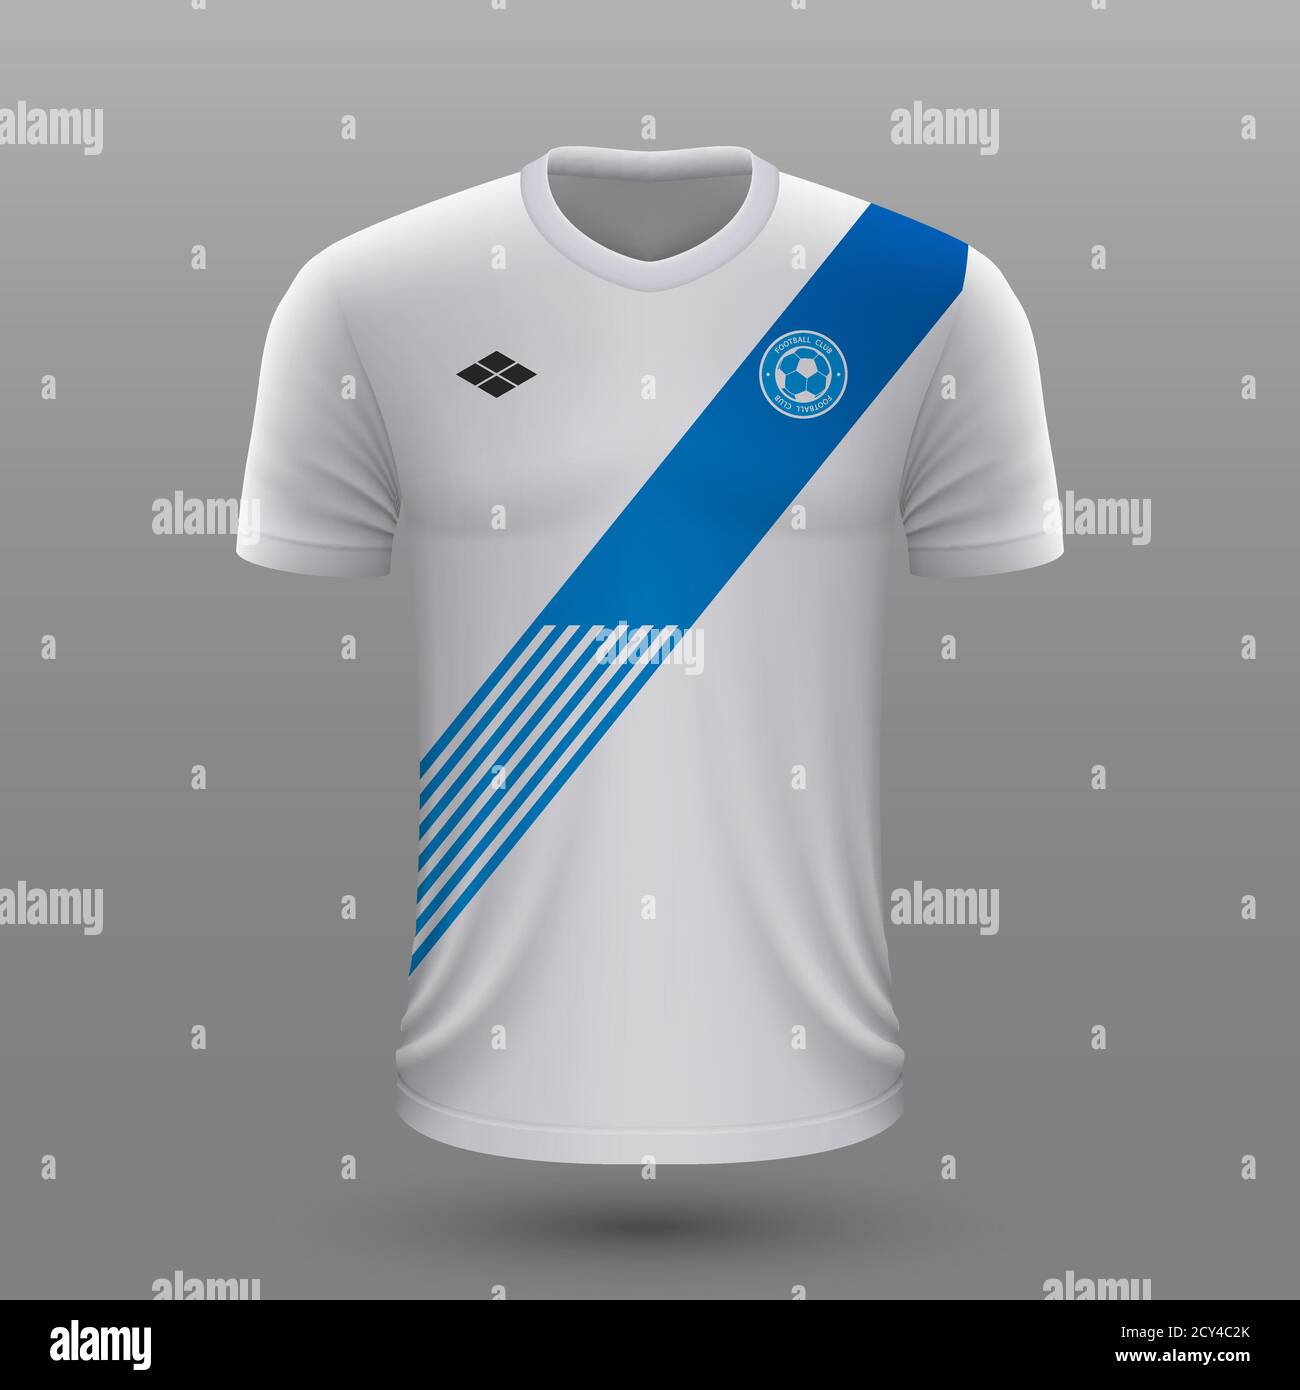 Realistic soccer shirt 2020, Greece away jersey template for football kit  Stock Vector Image & Art - Alamy